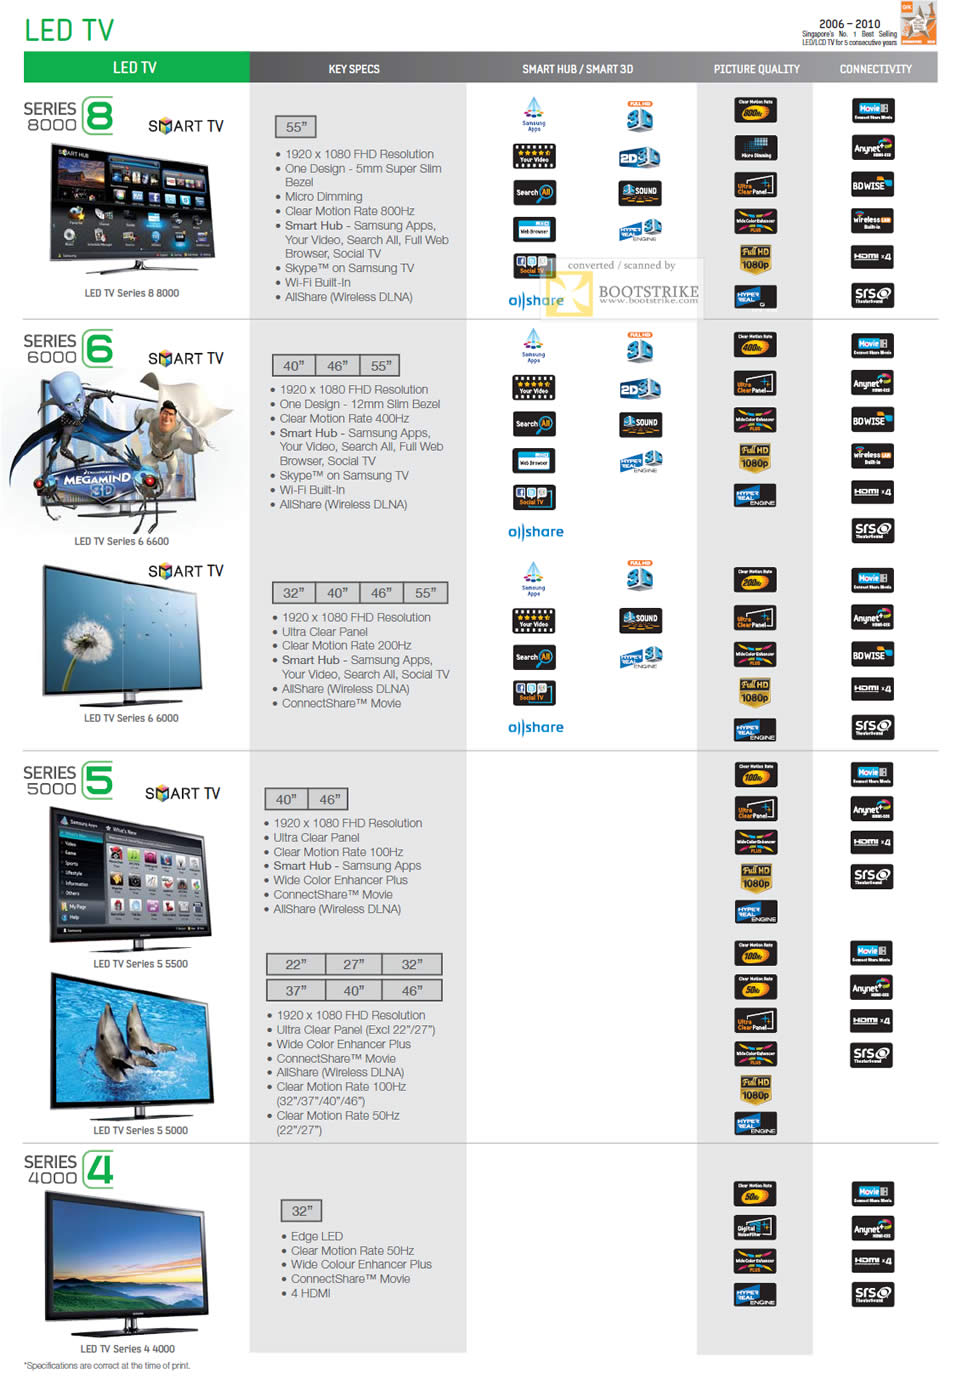 PC Show 2011 price list image brochure of Samsung Mega Discount LED TV Series 8 8000 6 6000 5 5000 Series 4 4000